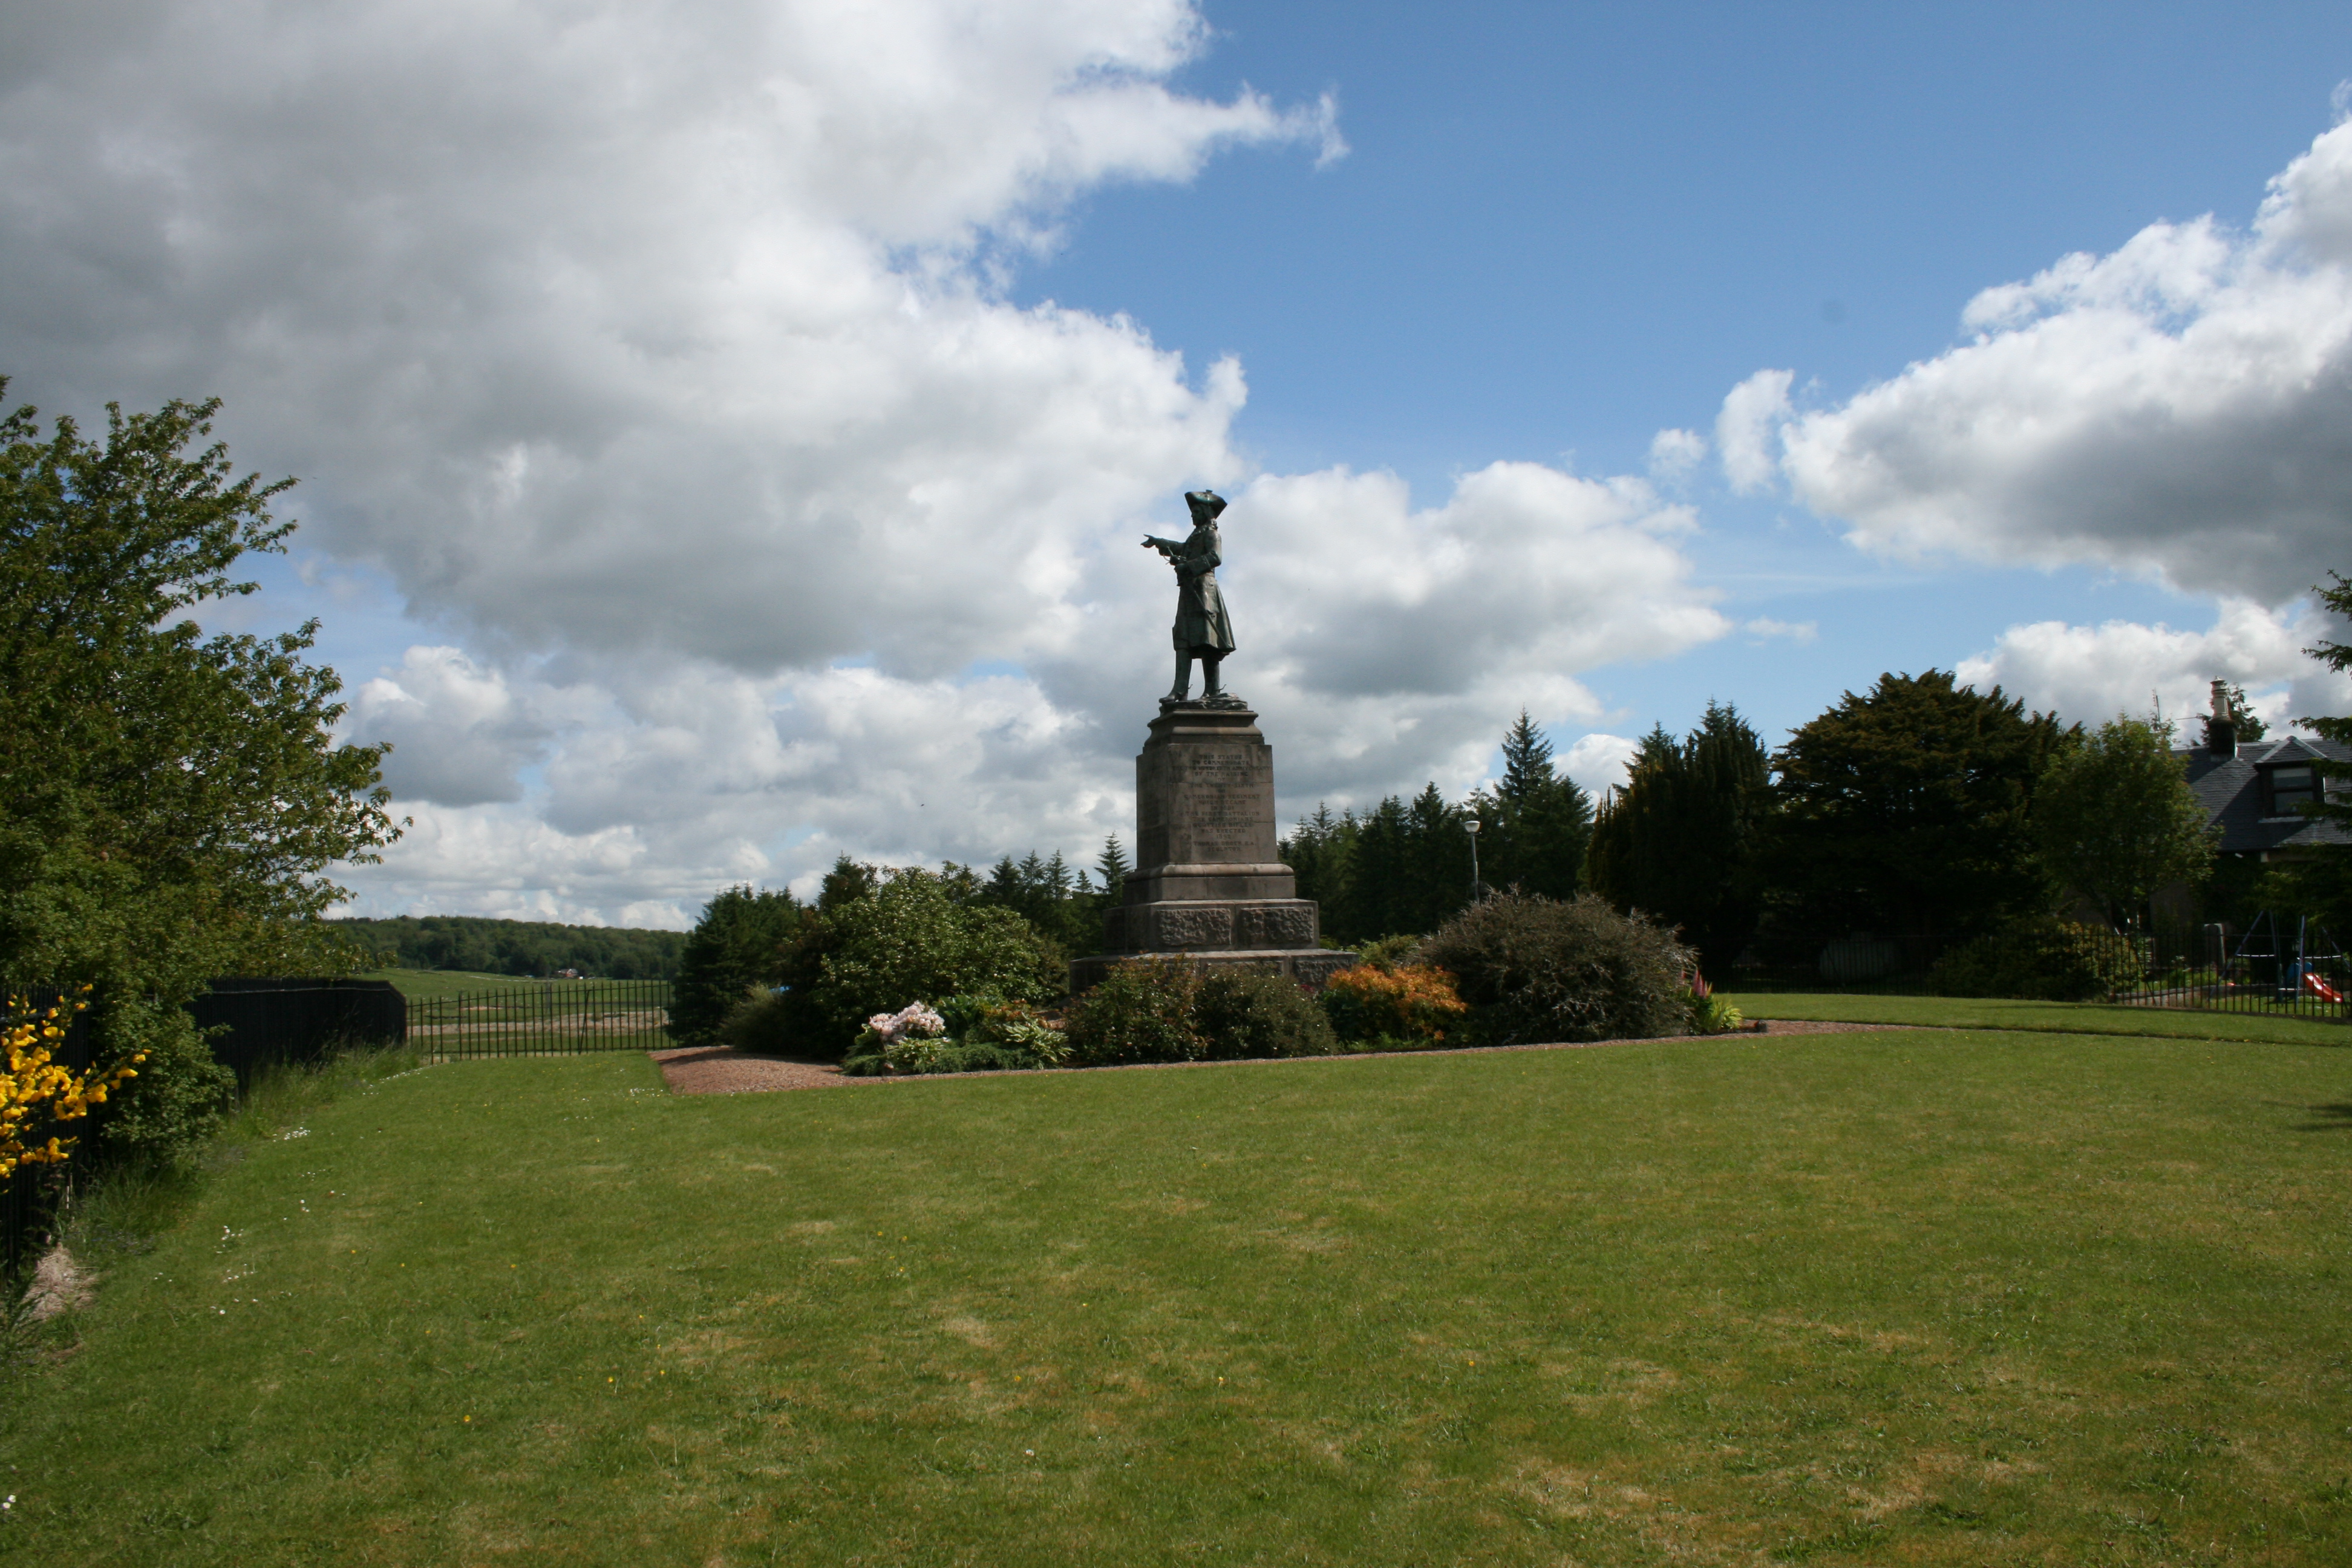 Angus statue